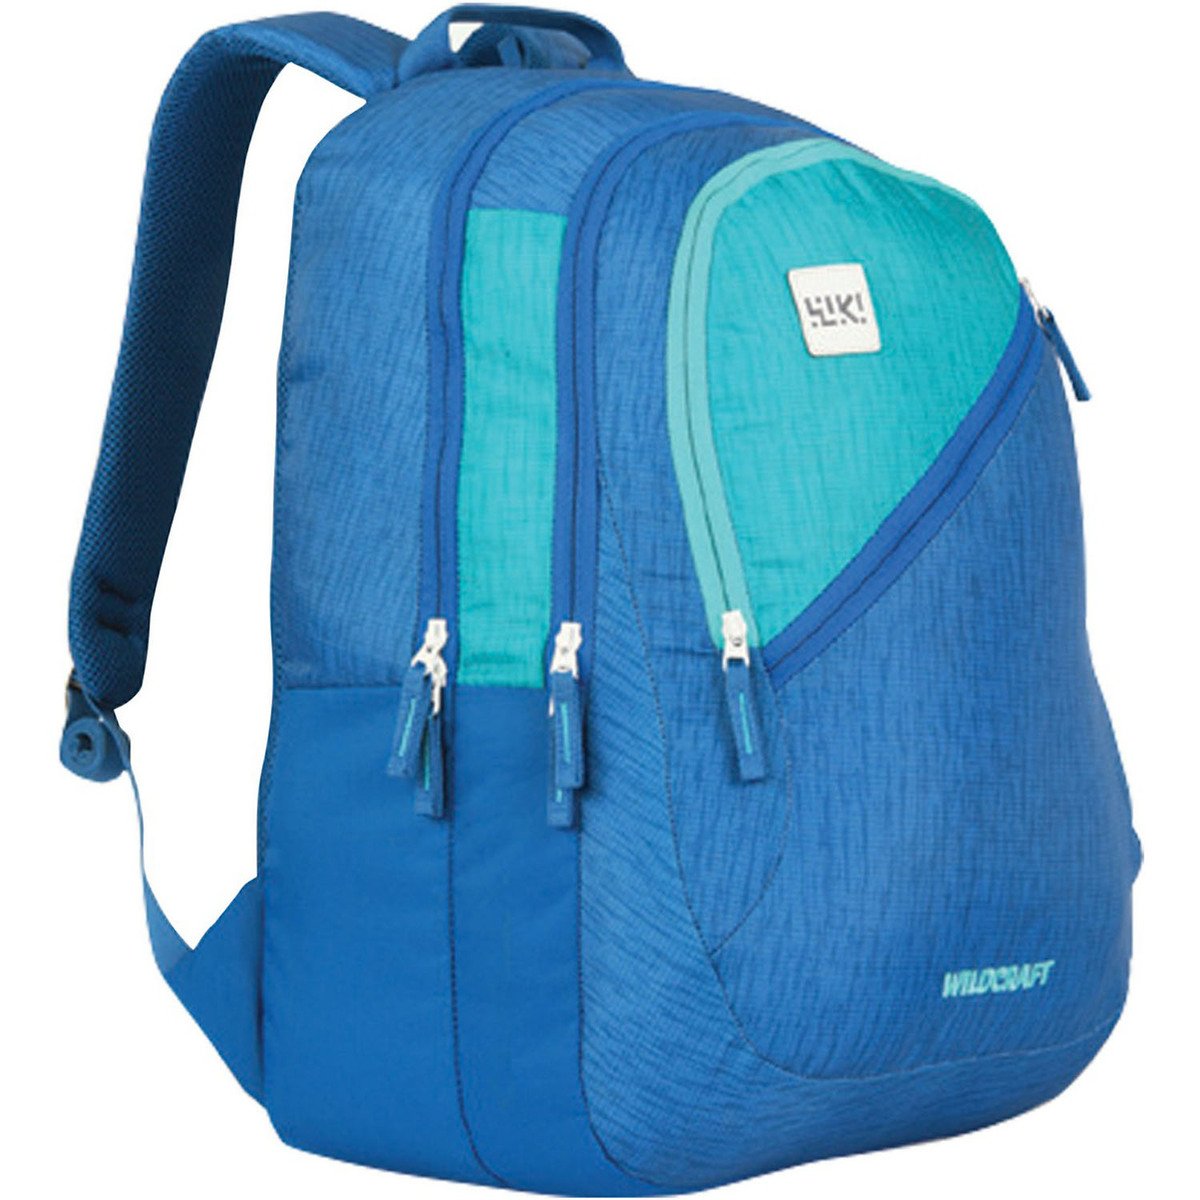 Wildcraft School Backpack Wiki7 Hue7 Blue 13.5inchx19.5inch